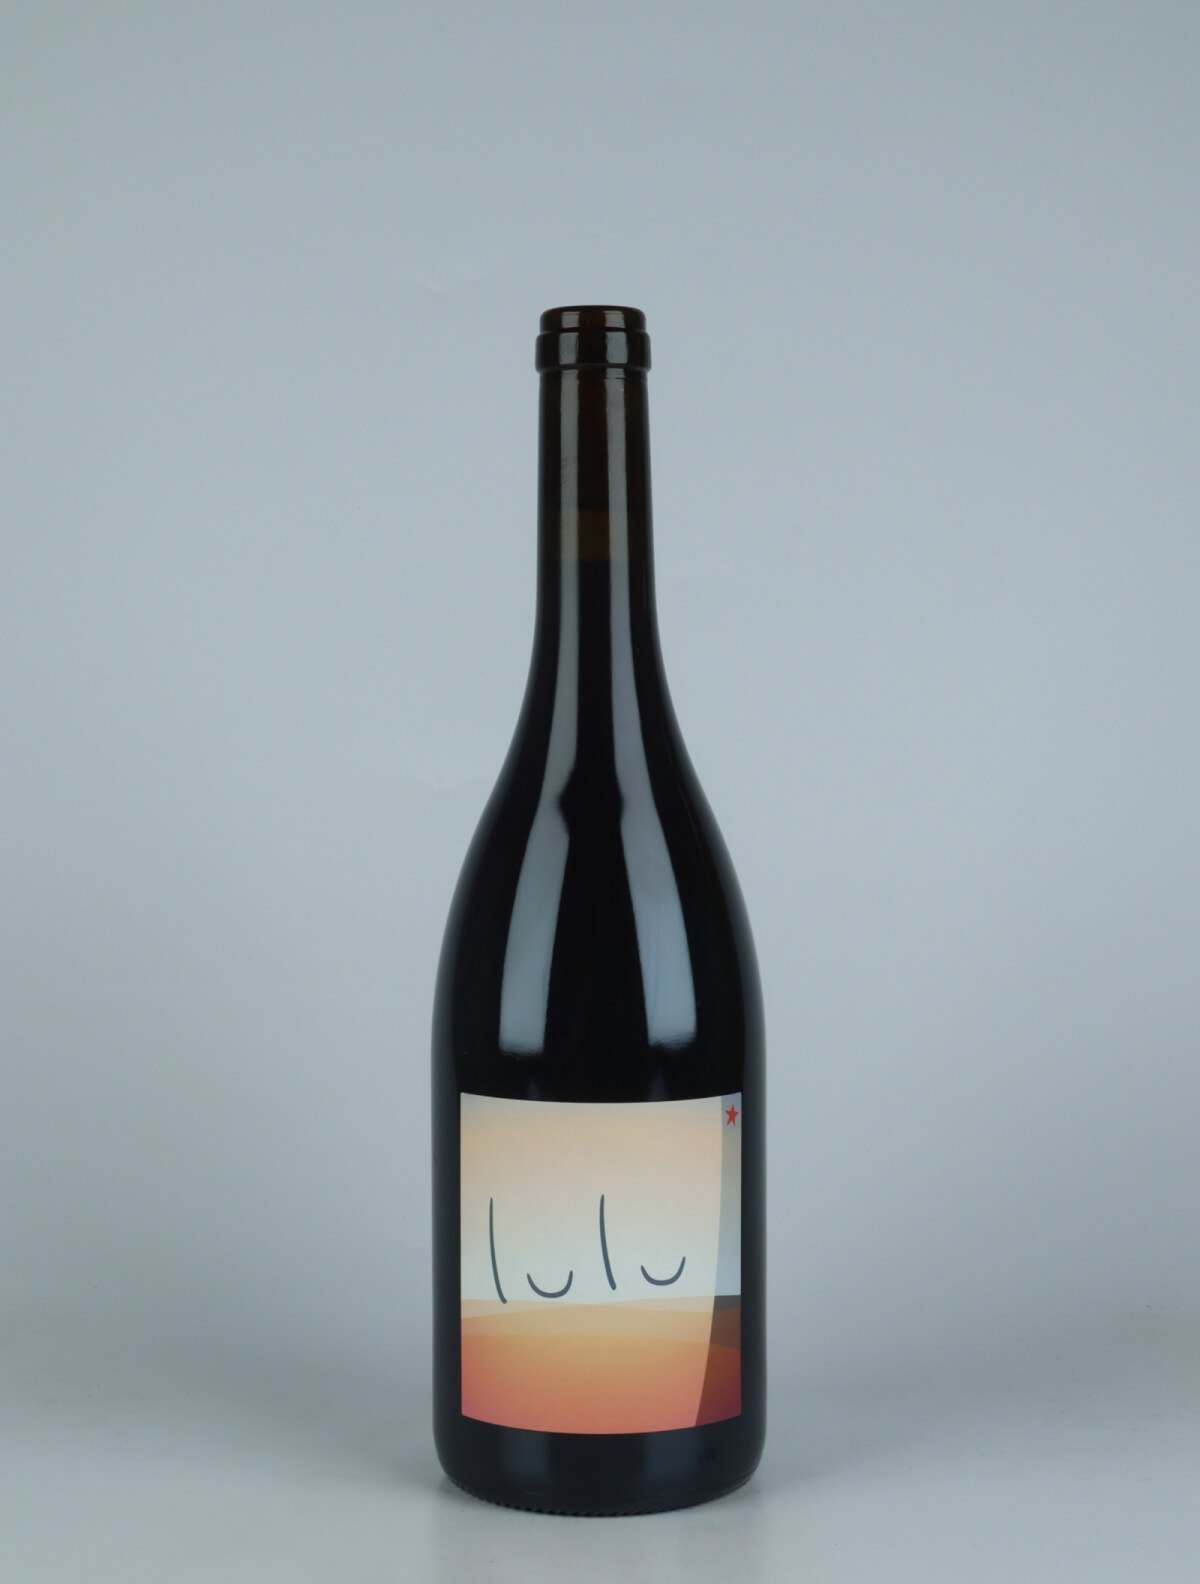 A bottle 2022 Lulu Red wine from Patrick Bouju, Auvergne in France